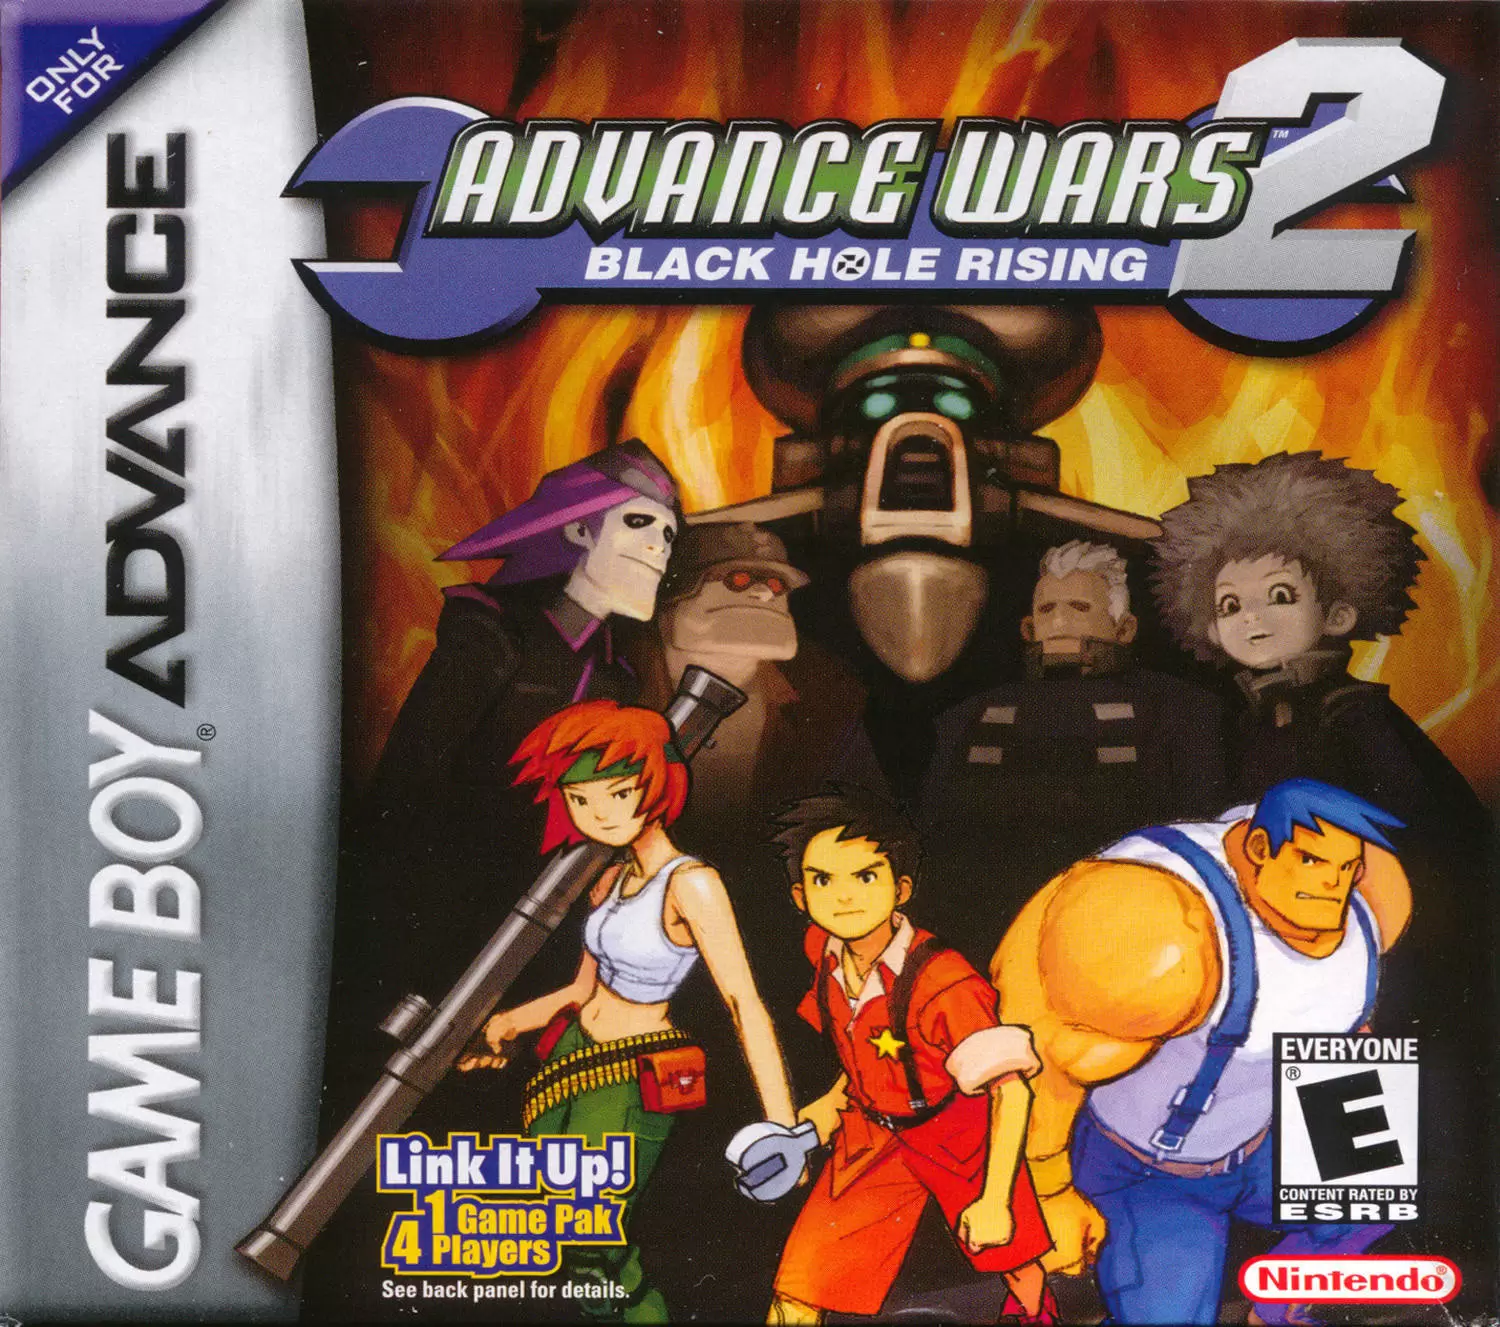 Jeux Game Boy Advance - Advance Wars 2: Black Hole Rising